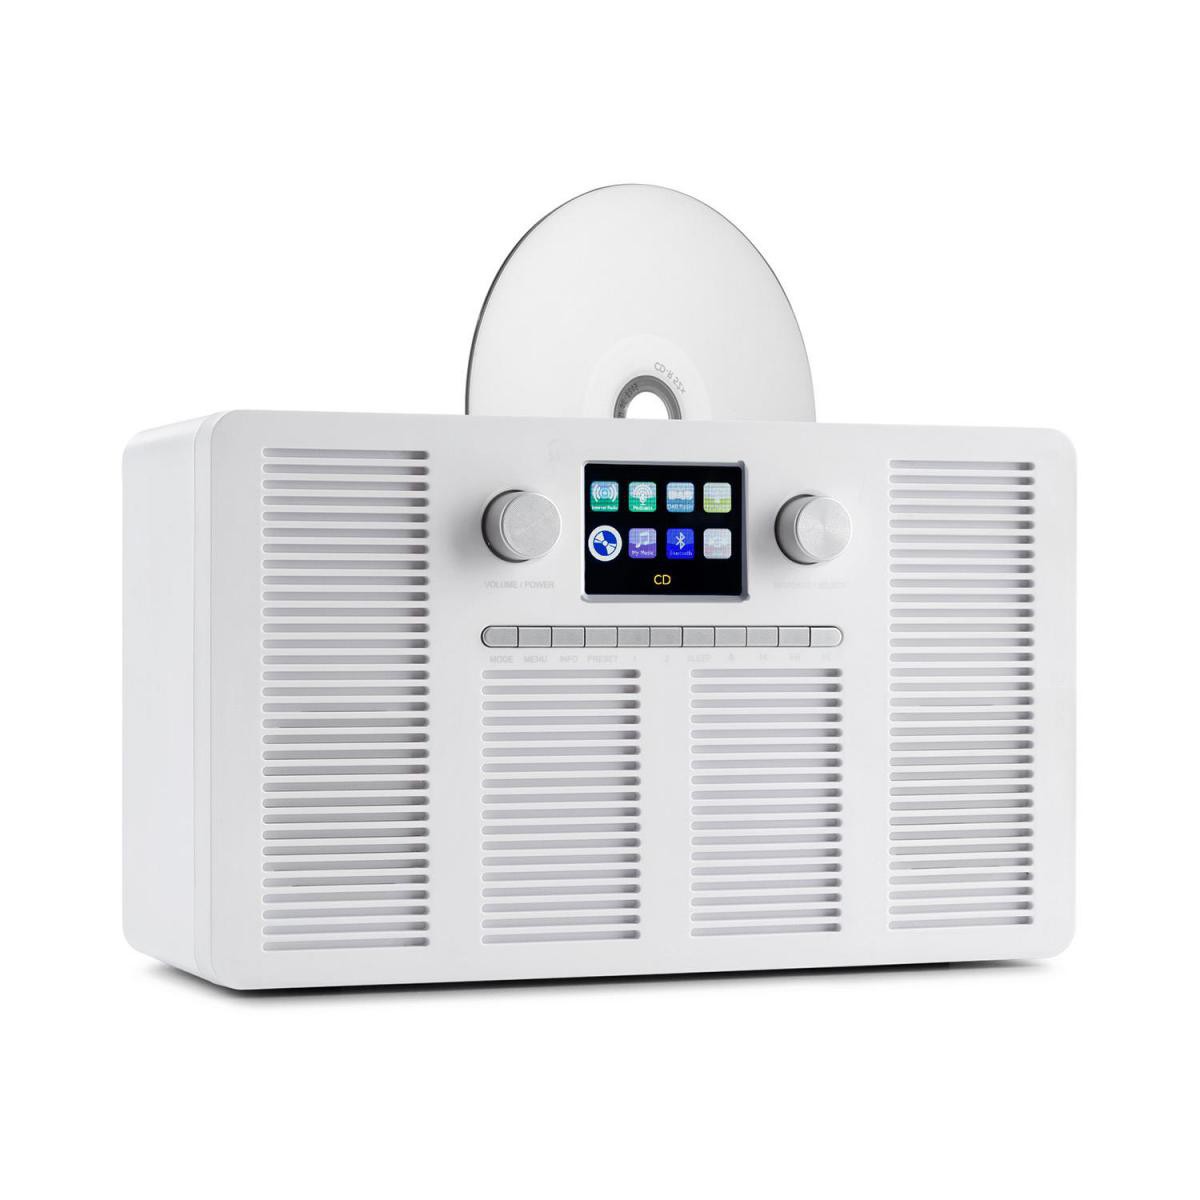 Auna - auna Vertico - Radio Internet avec lecteur CD , tuner IR / DAB + / FM , écran HCC 2,4 " - Blanc - Radio